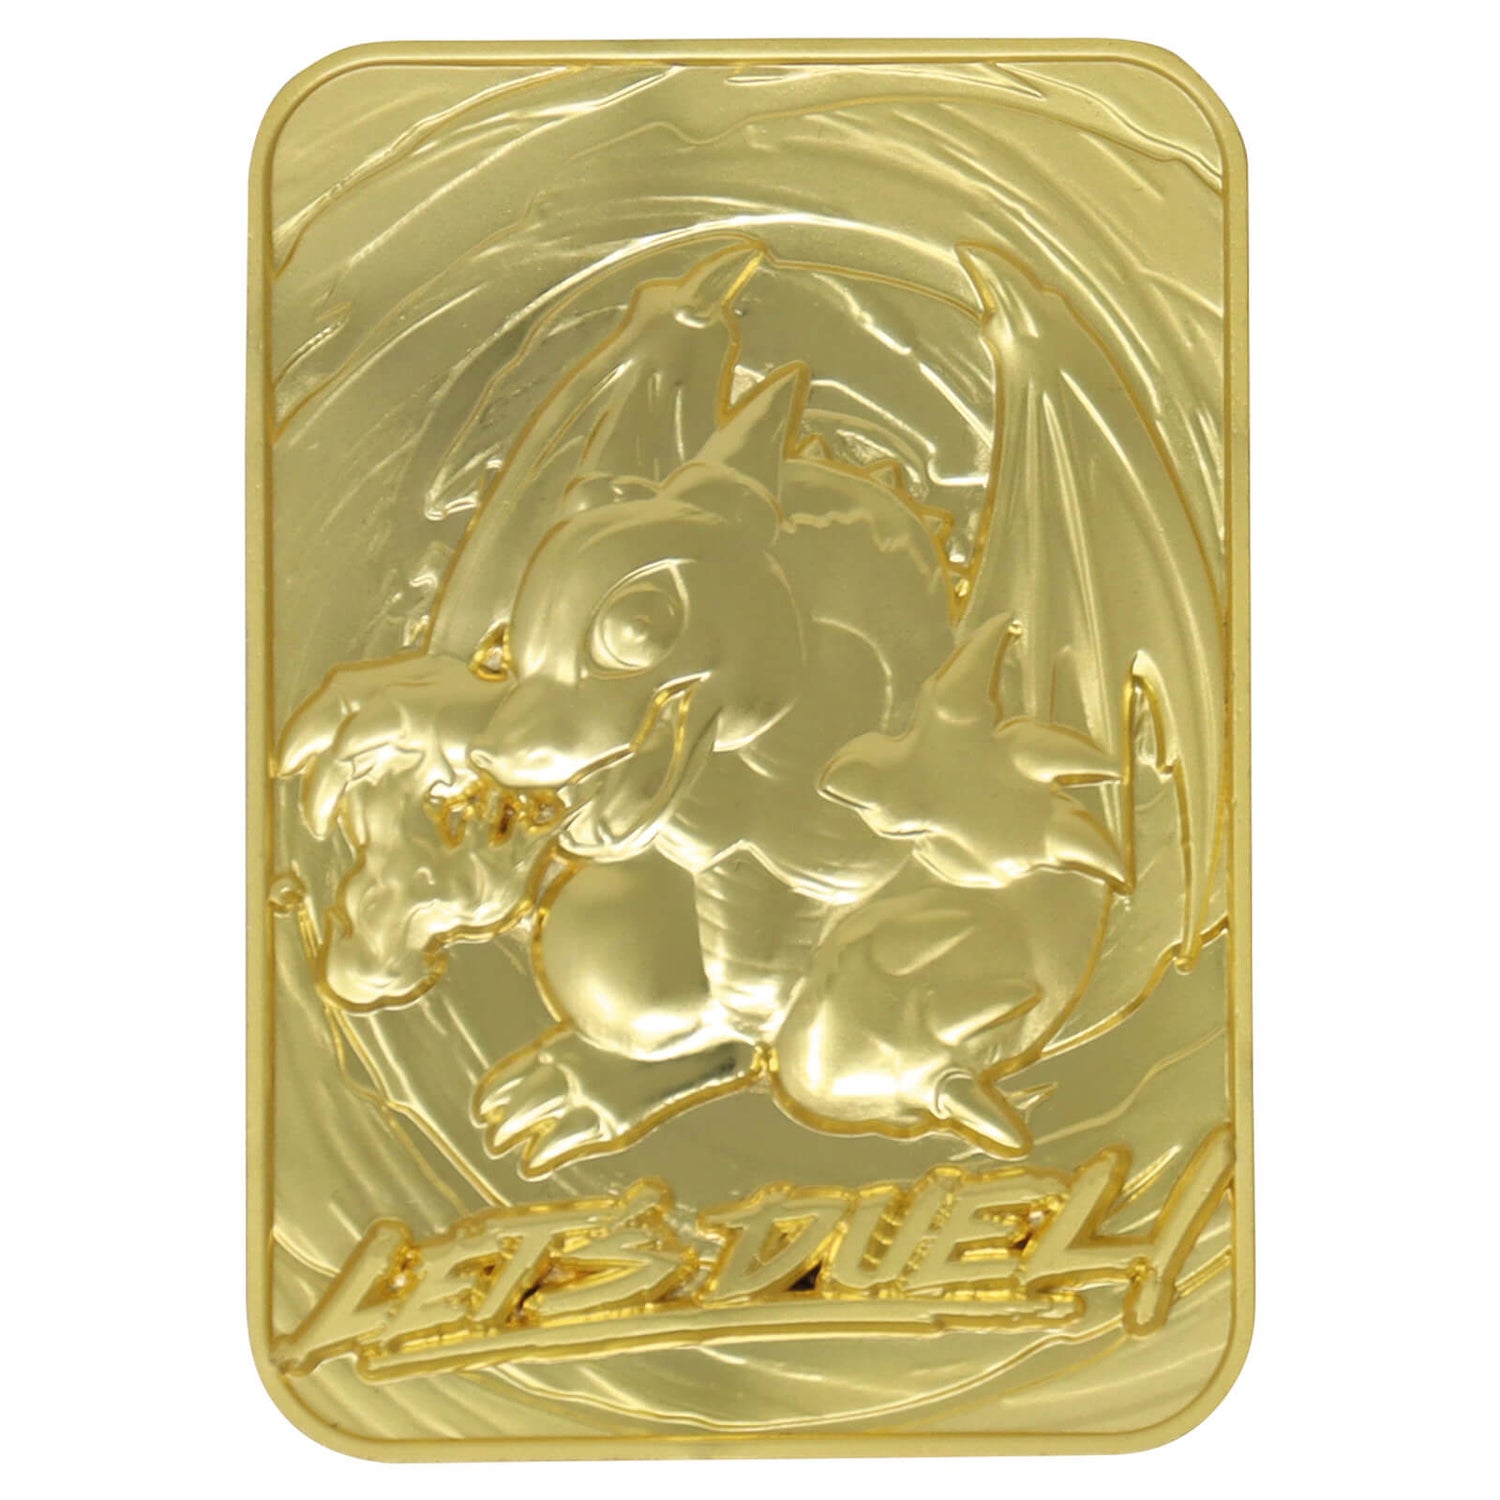 Fanattik Yu-Gi-Oh! Baby Dragon 24K Gold Plated Limited Edition Collectible Metal Card